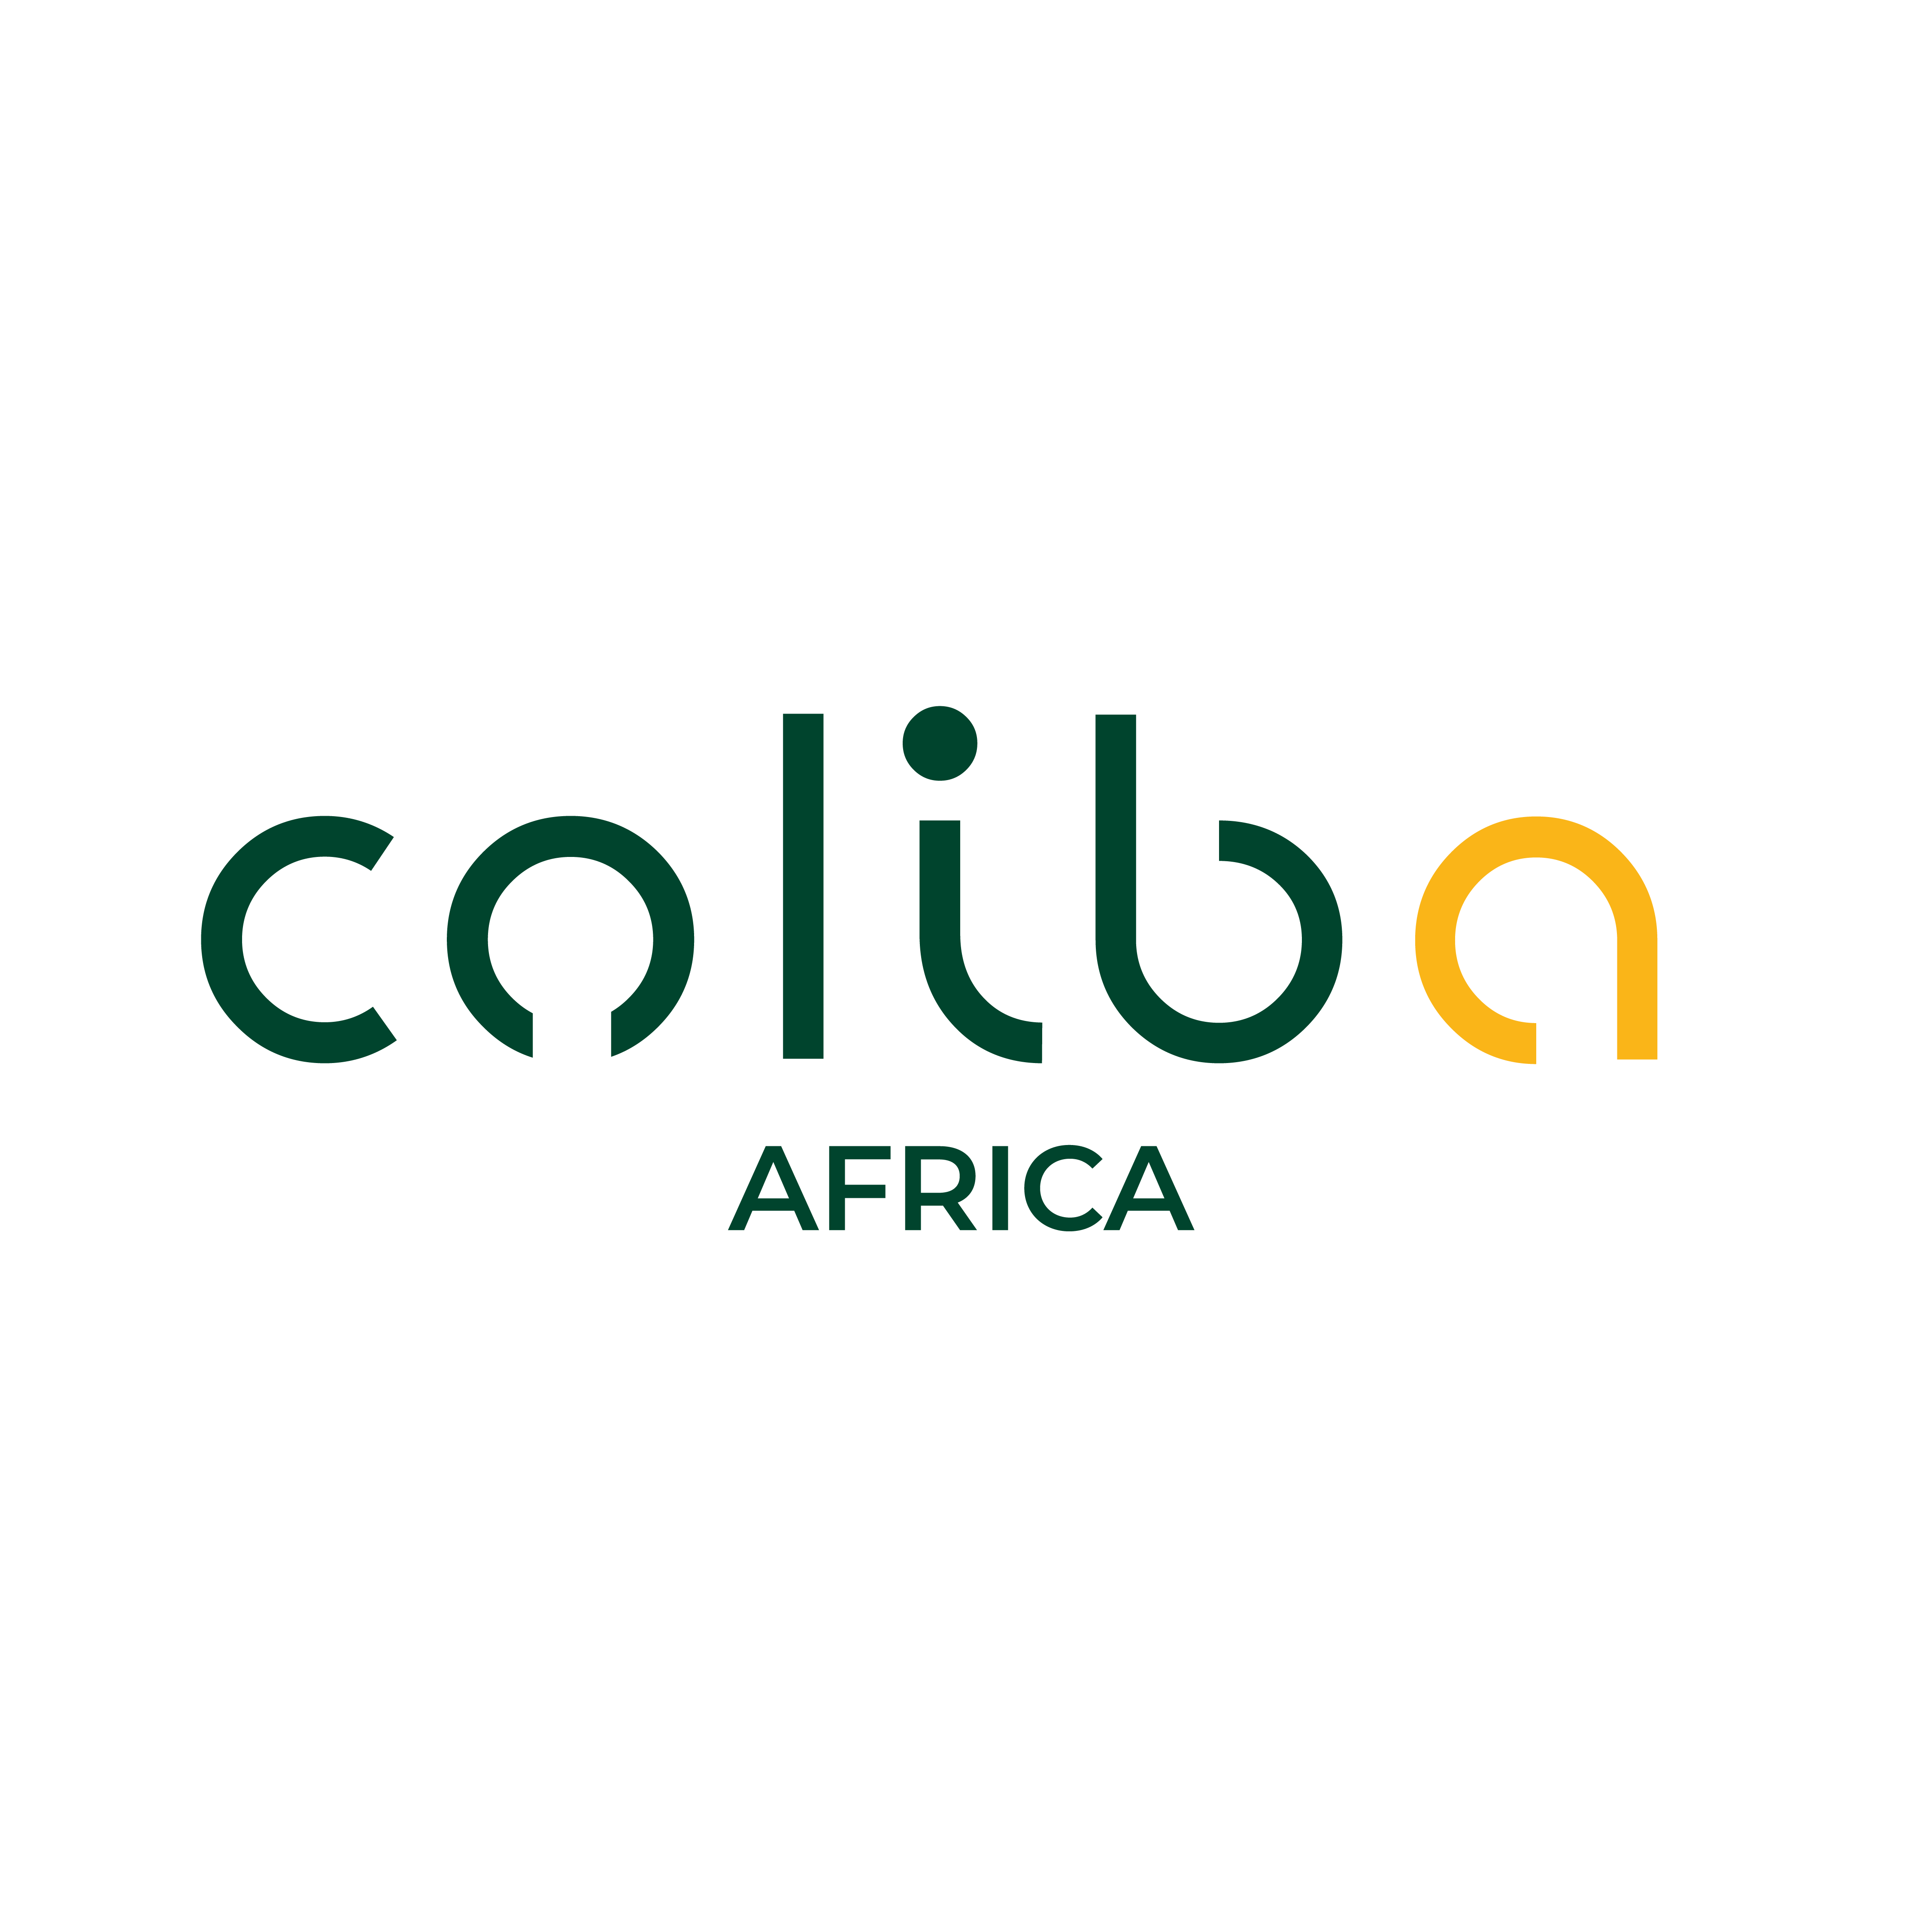 COLIBA AFRICA